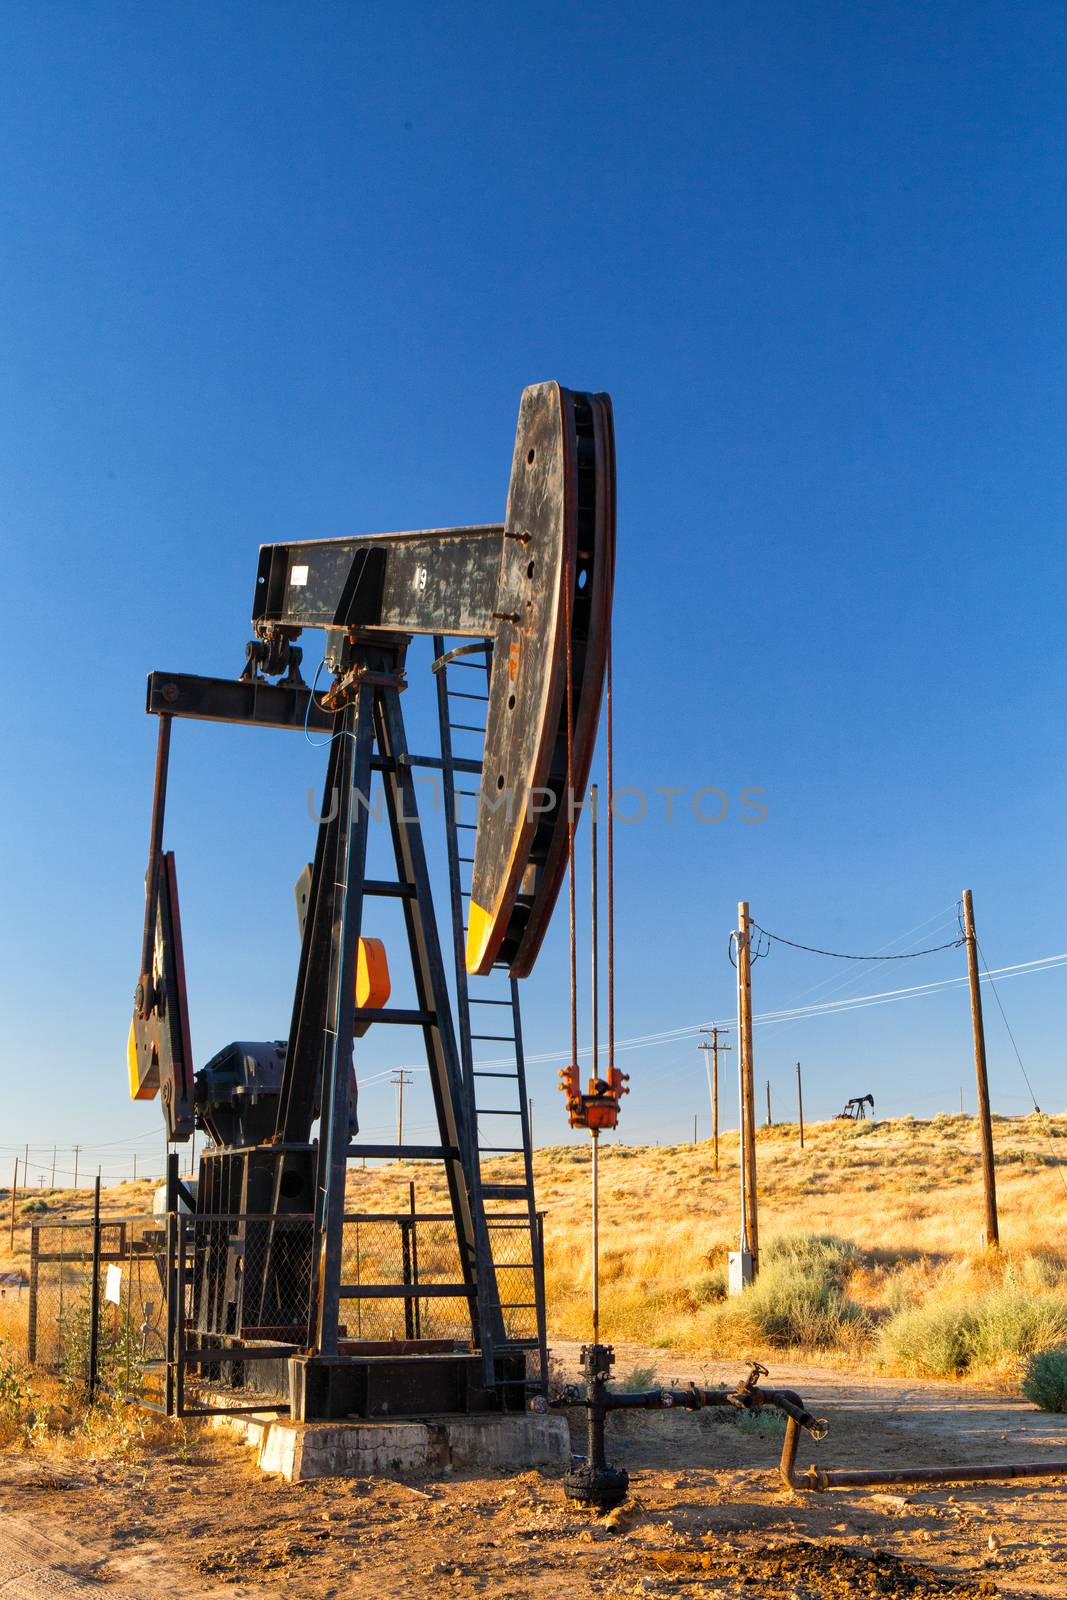 Working oil pump in desert by CaptureLight